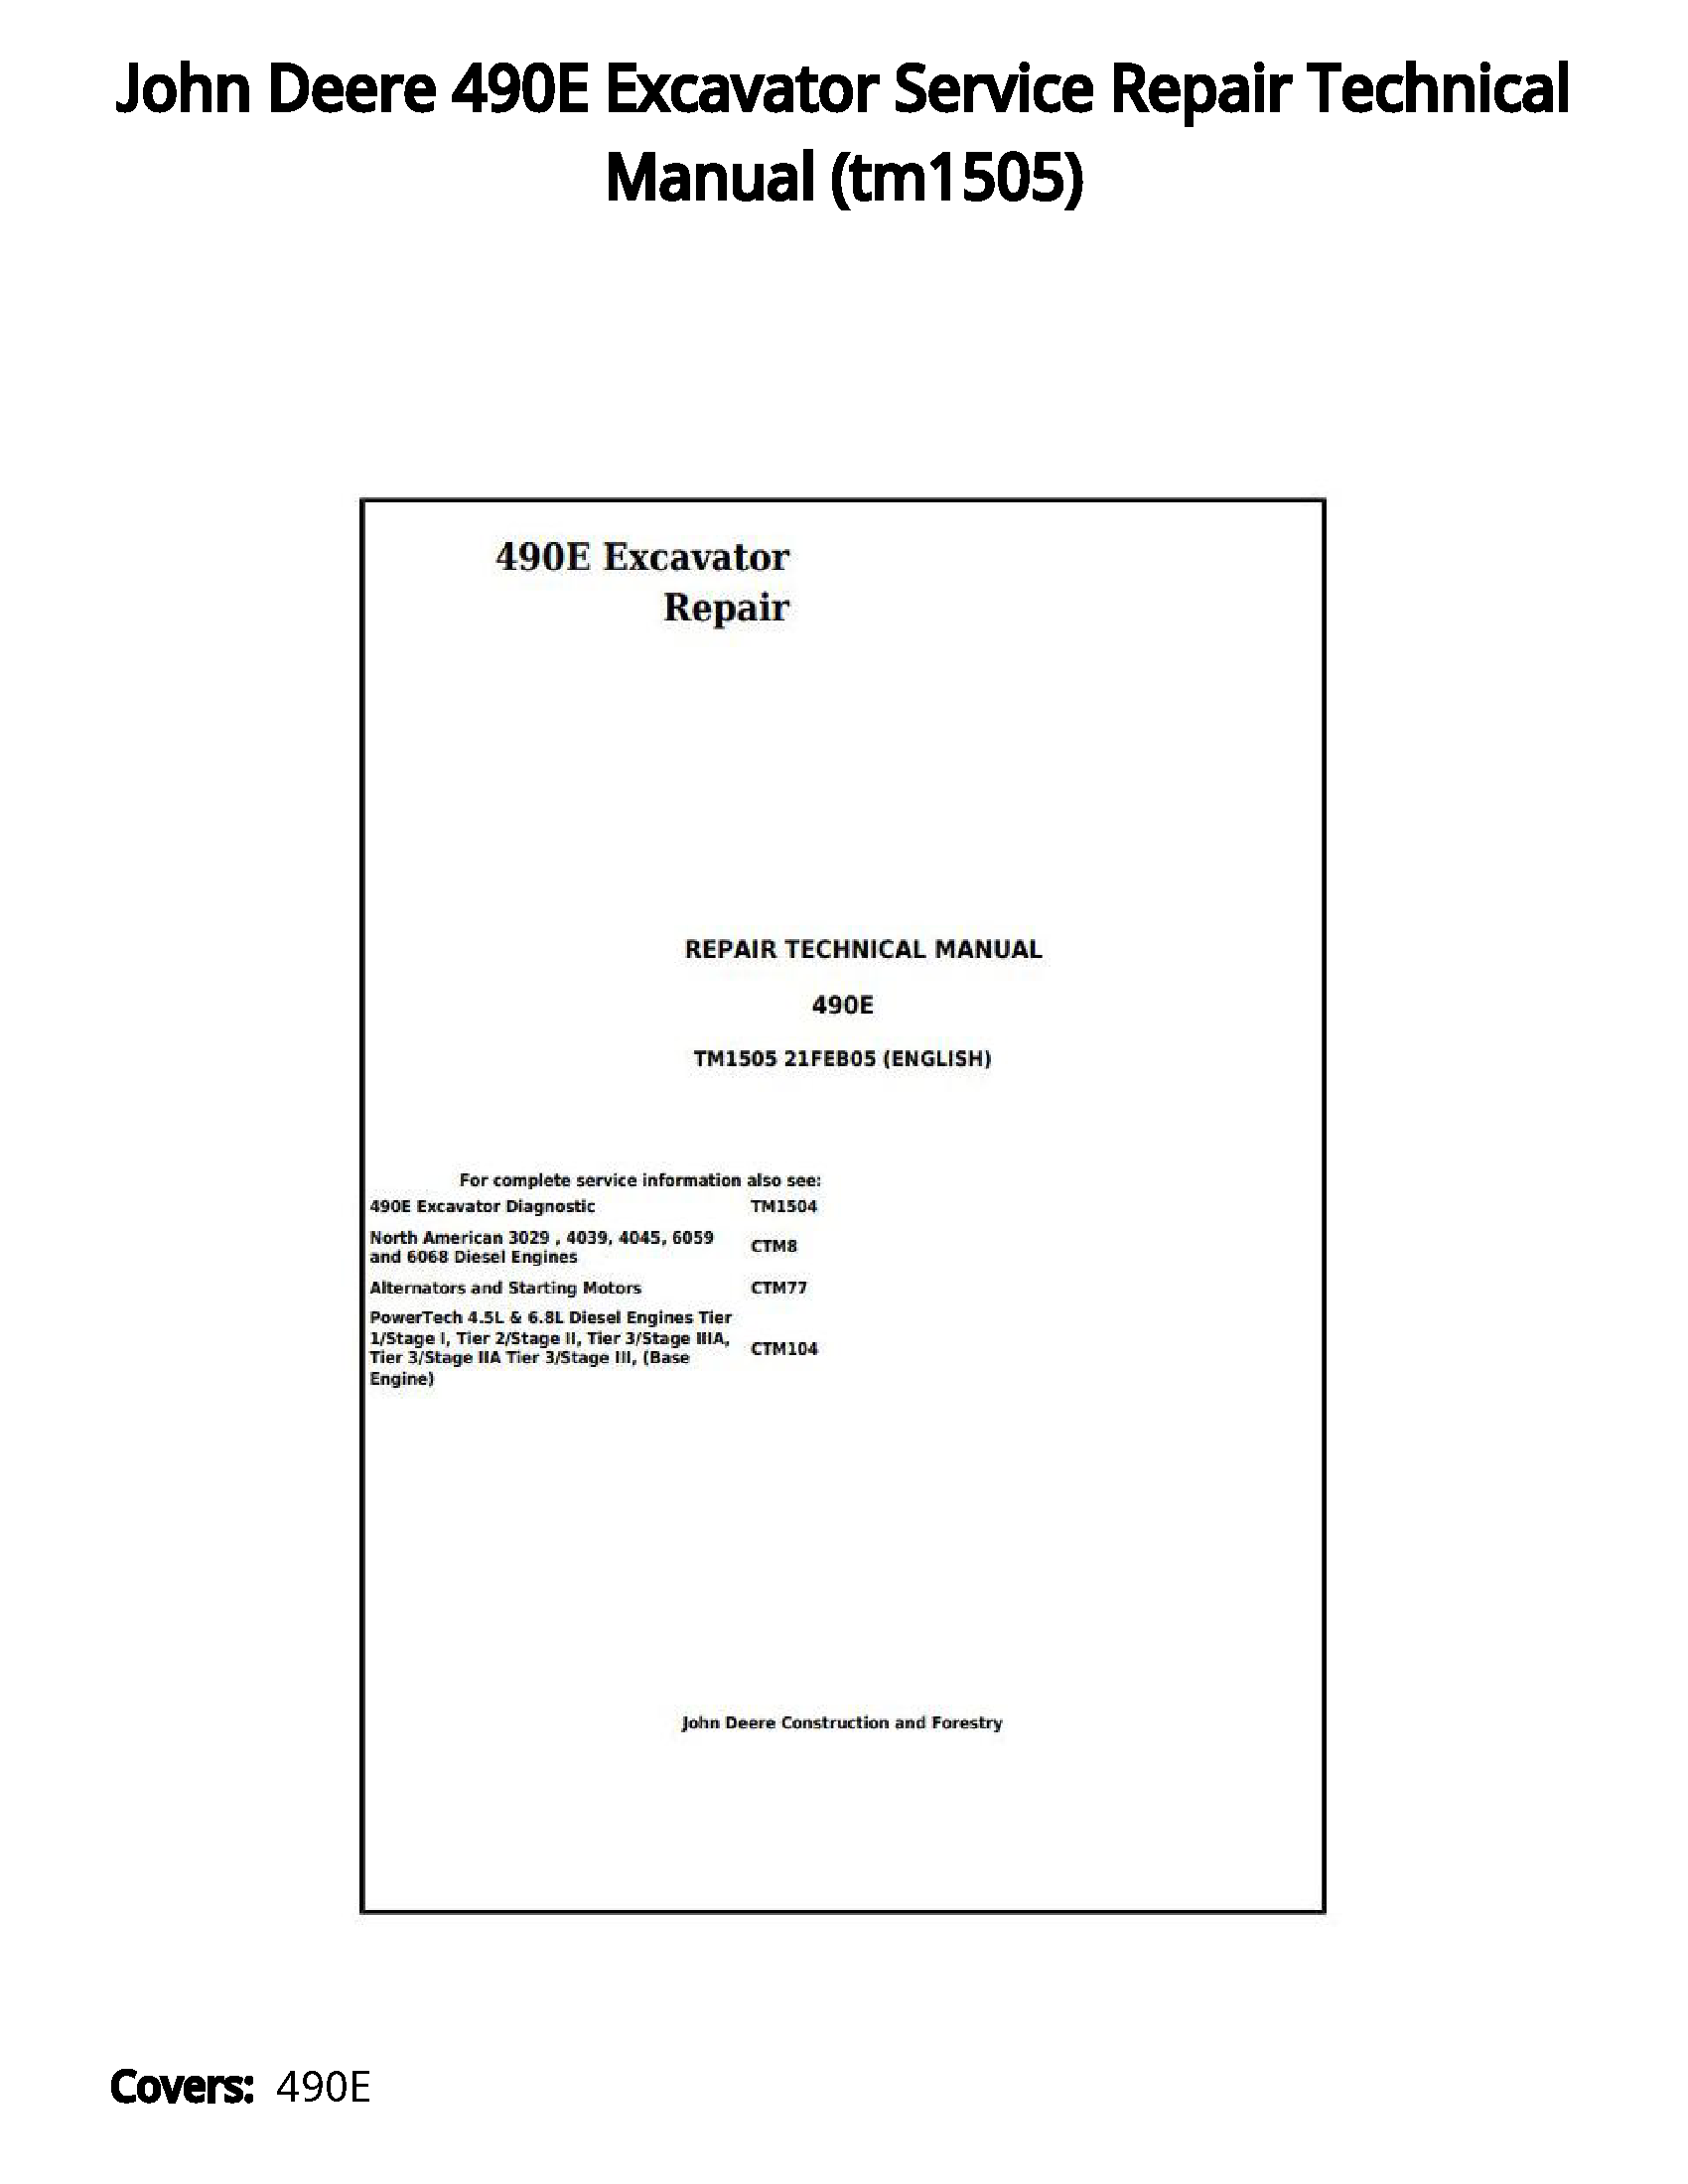 John Deere 490E Excavator Service Repair Technical Manual - tm1505